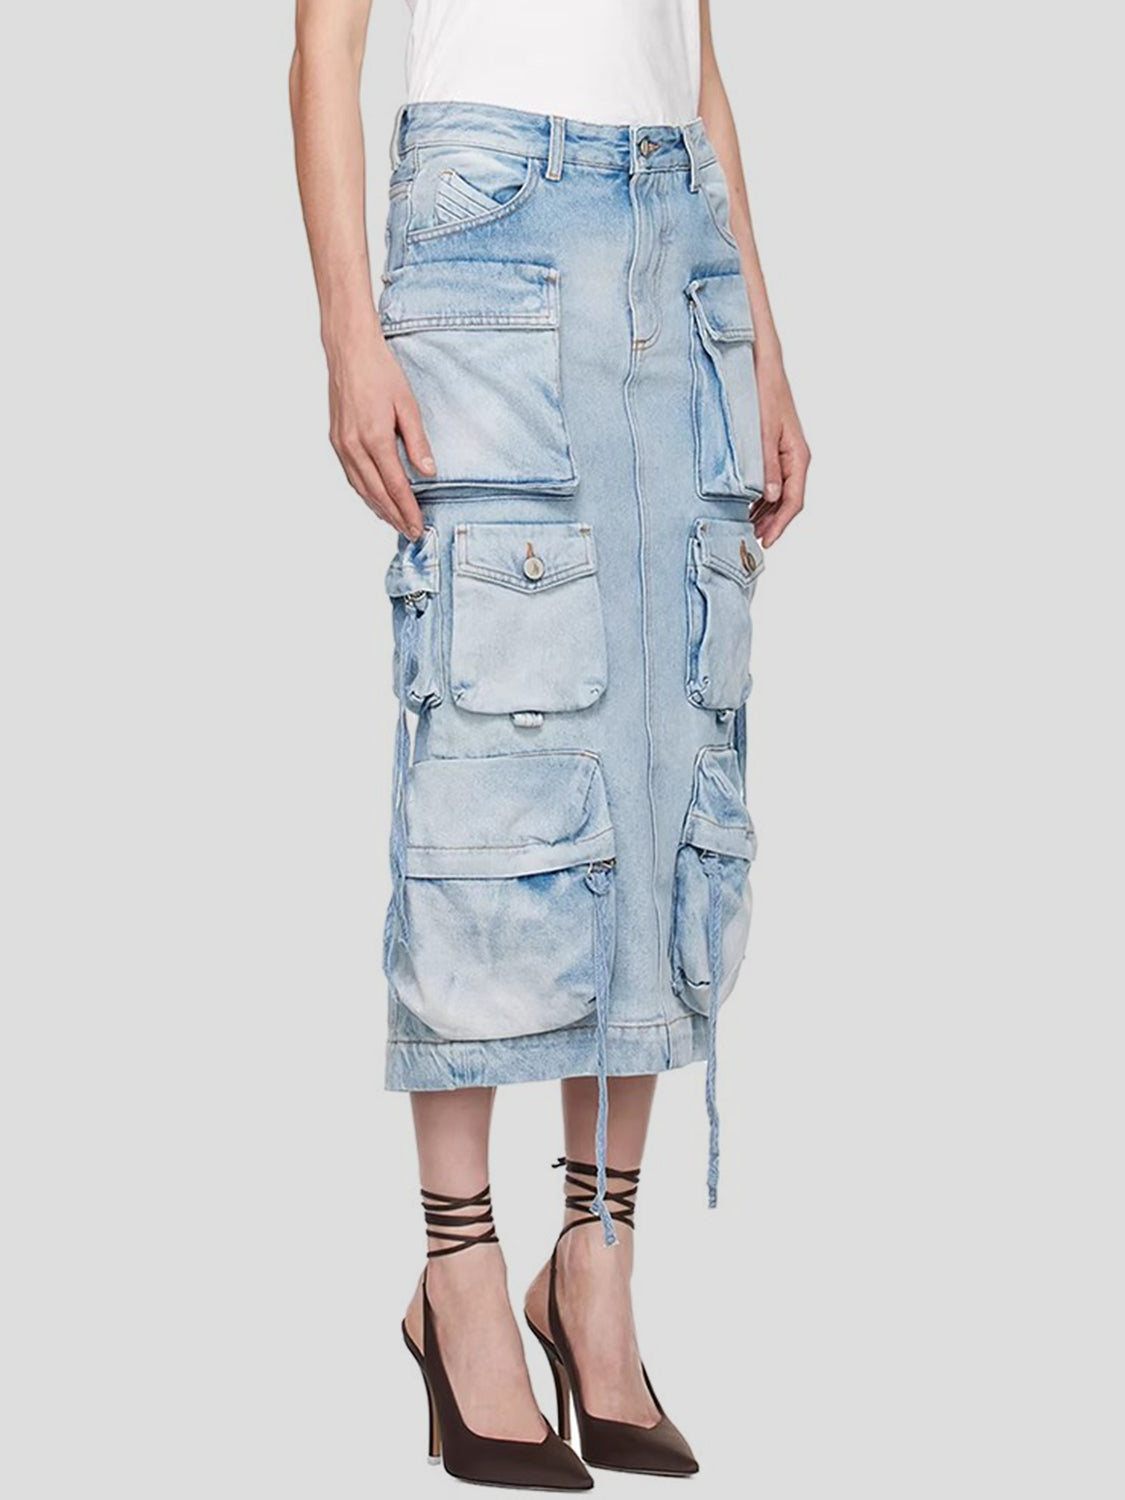 Cargo Skirt With Pockets Designer Style Women's Fashion Slit Midi Jean Skirt